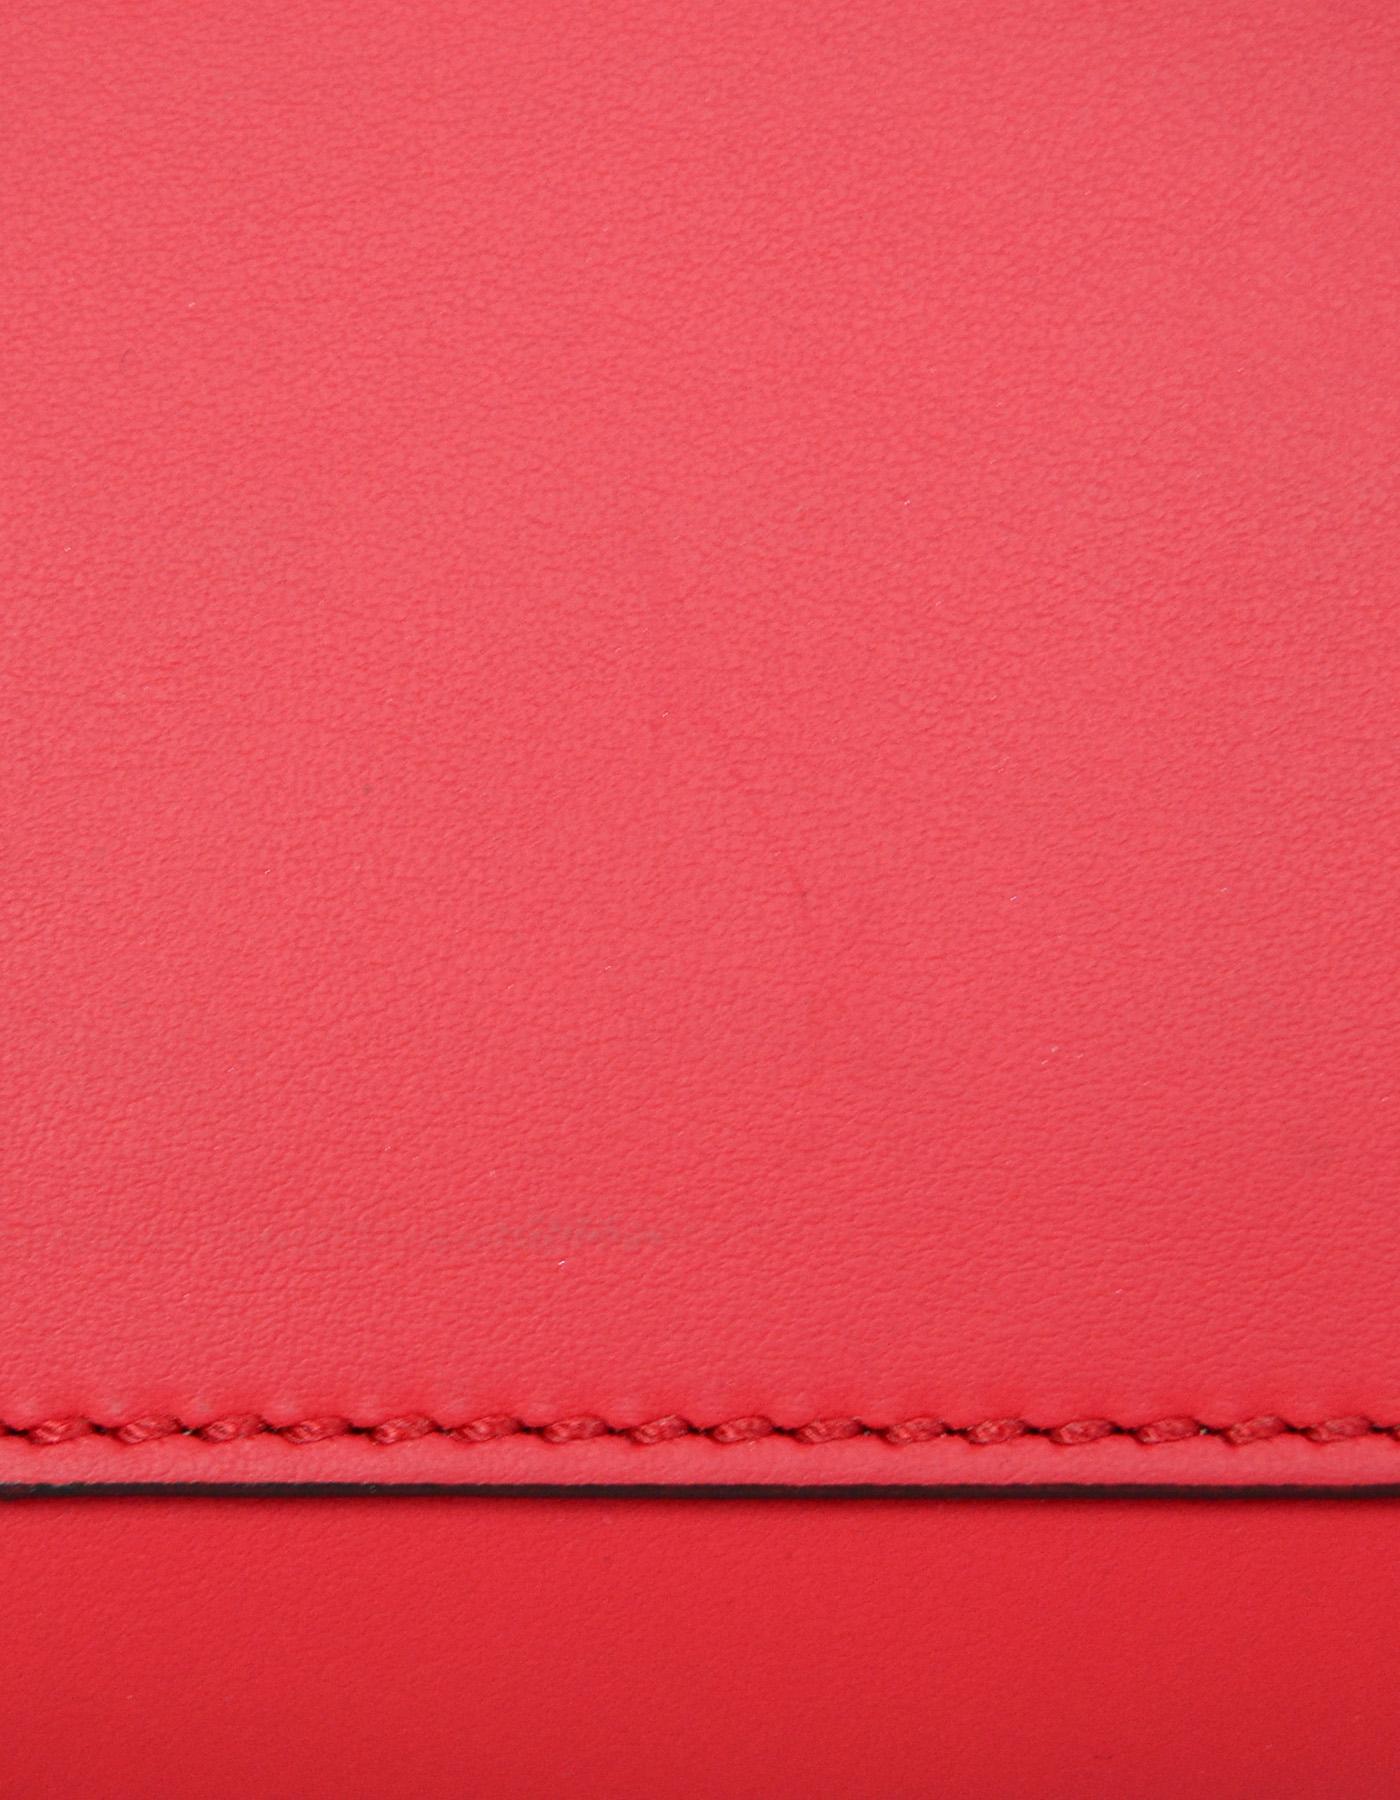 Fendi Red Nappa Leather Whipstitch Fashion Show Dotcom Satchel Bag w/ Strap 7